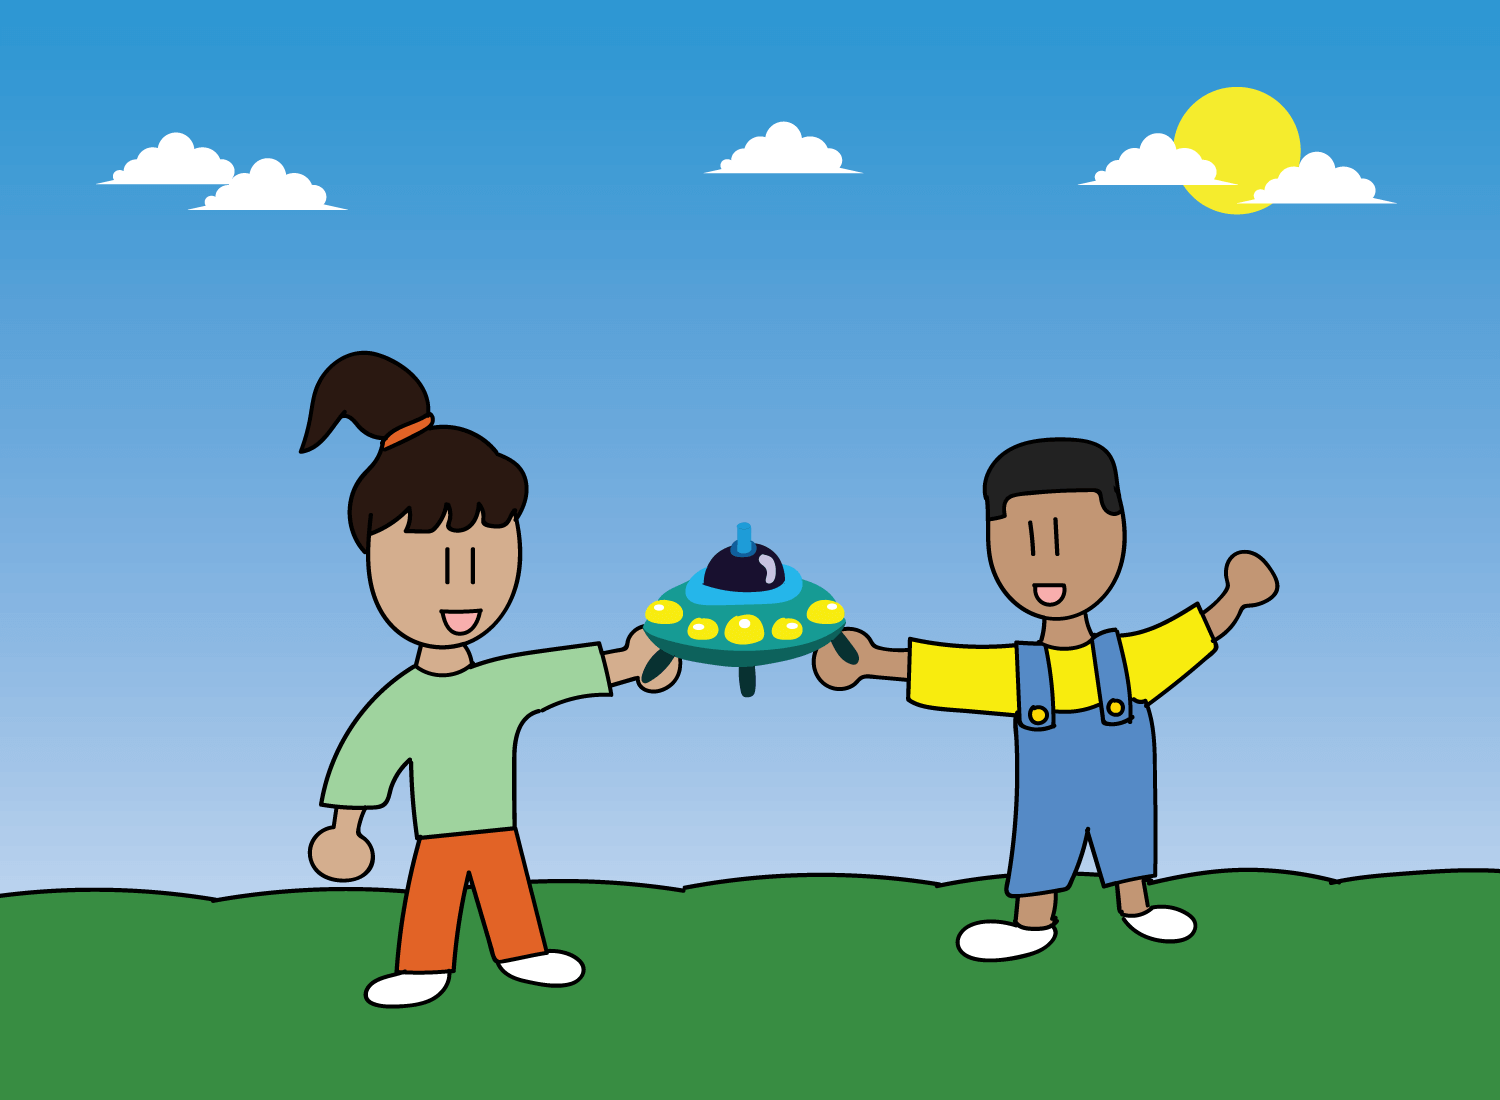 kids sharing a toy together cartoon illustration